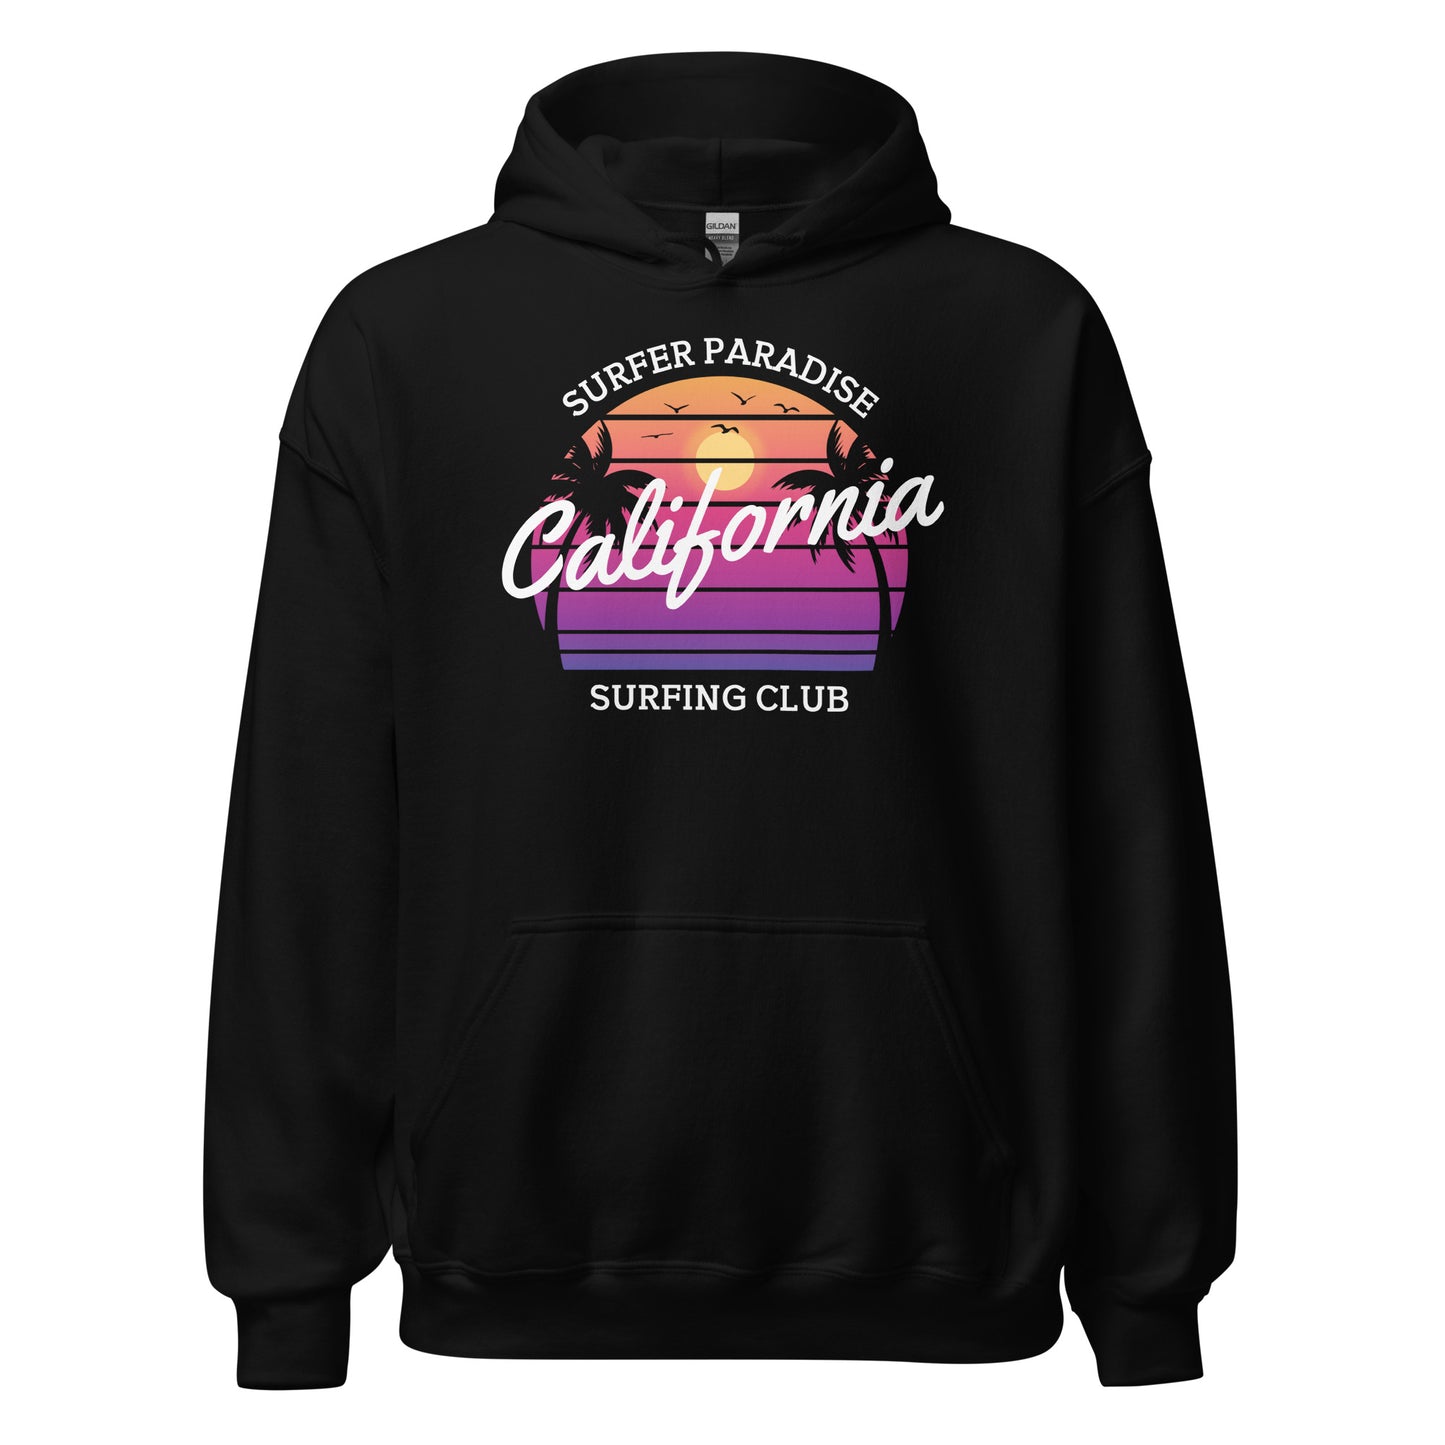 Retro California Surf Hoodie - Summer Vibes Sweatshirt